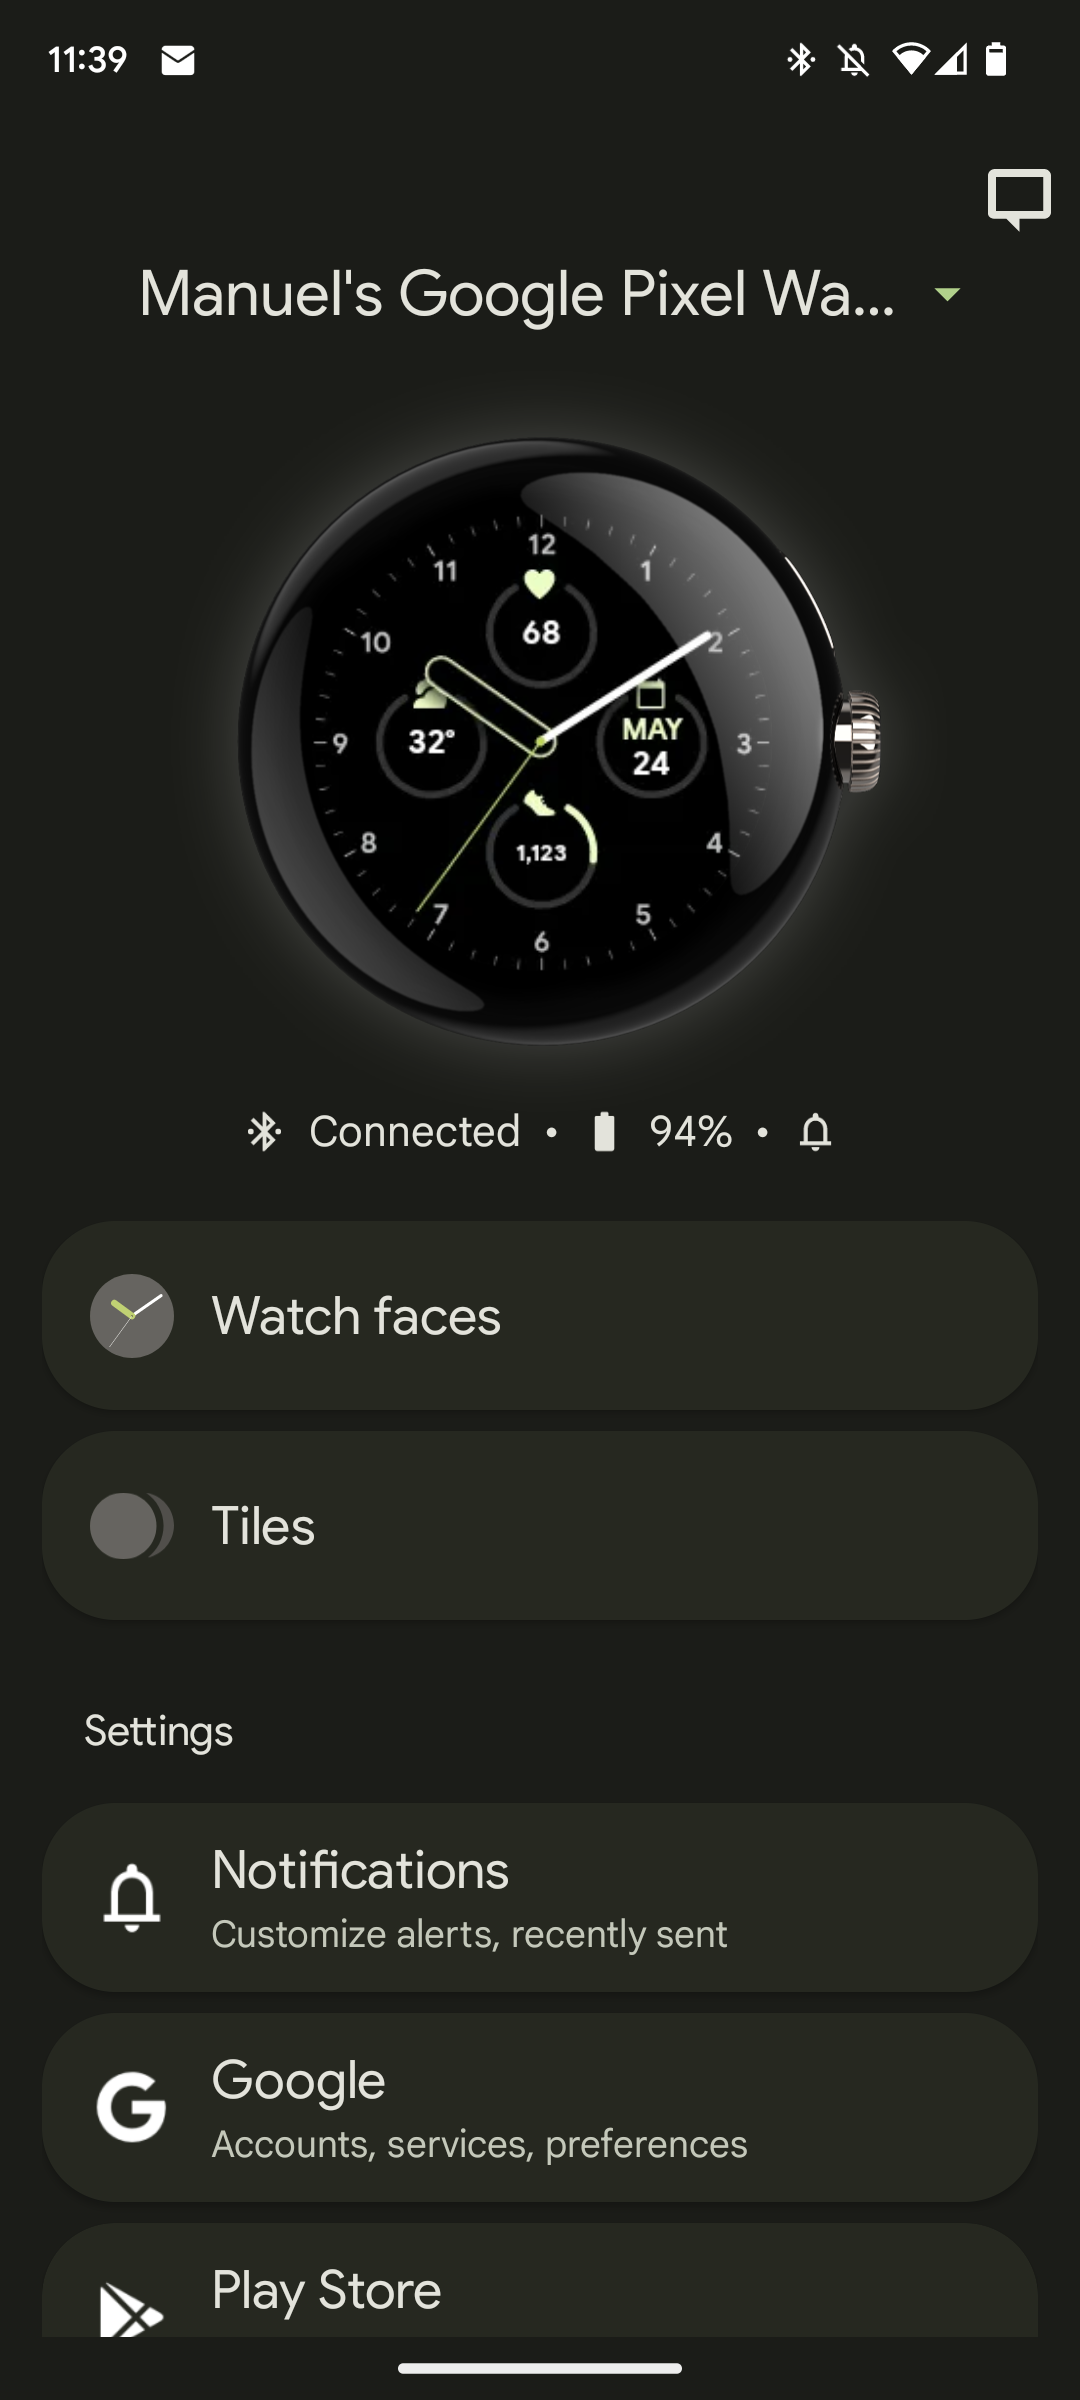 Google Pixel Watch Notifications settings